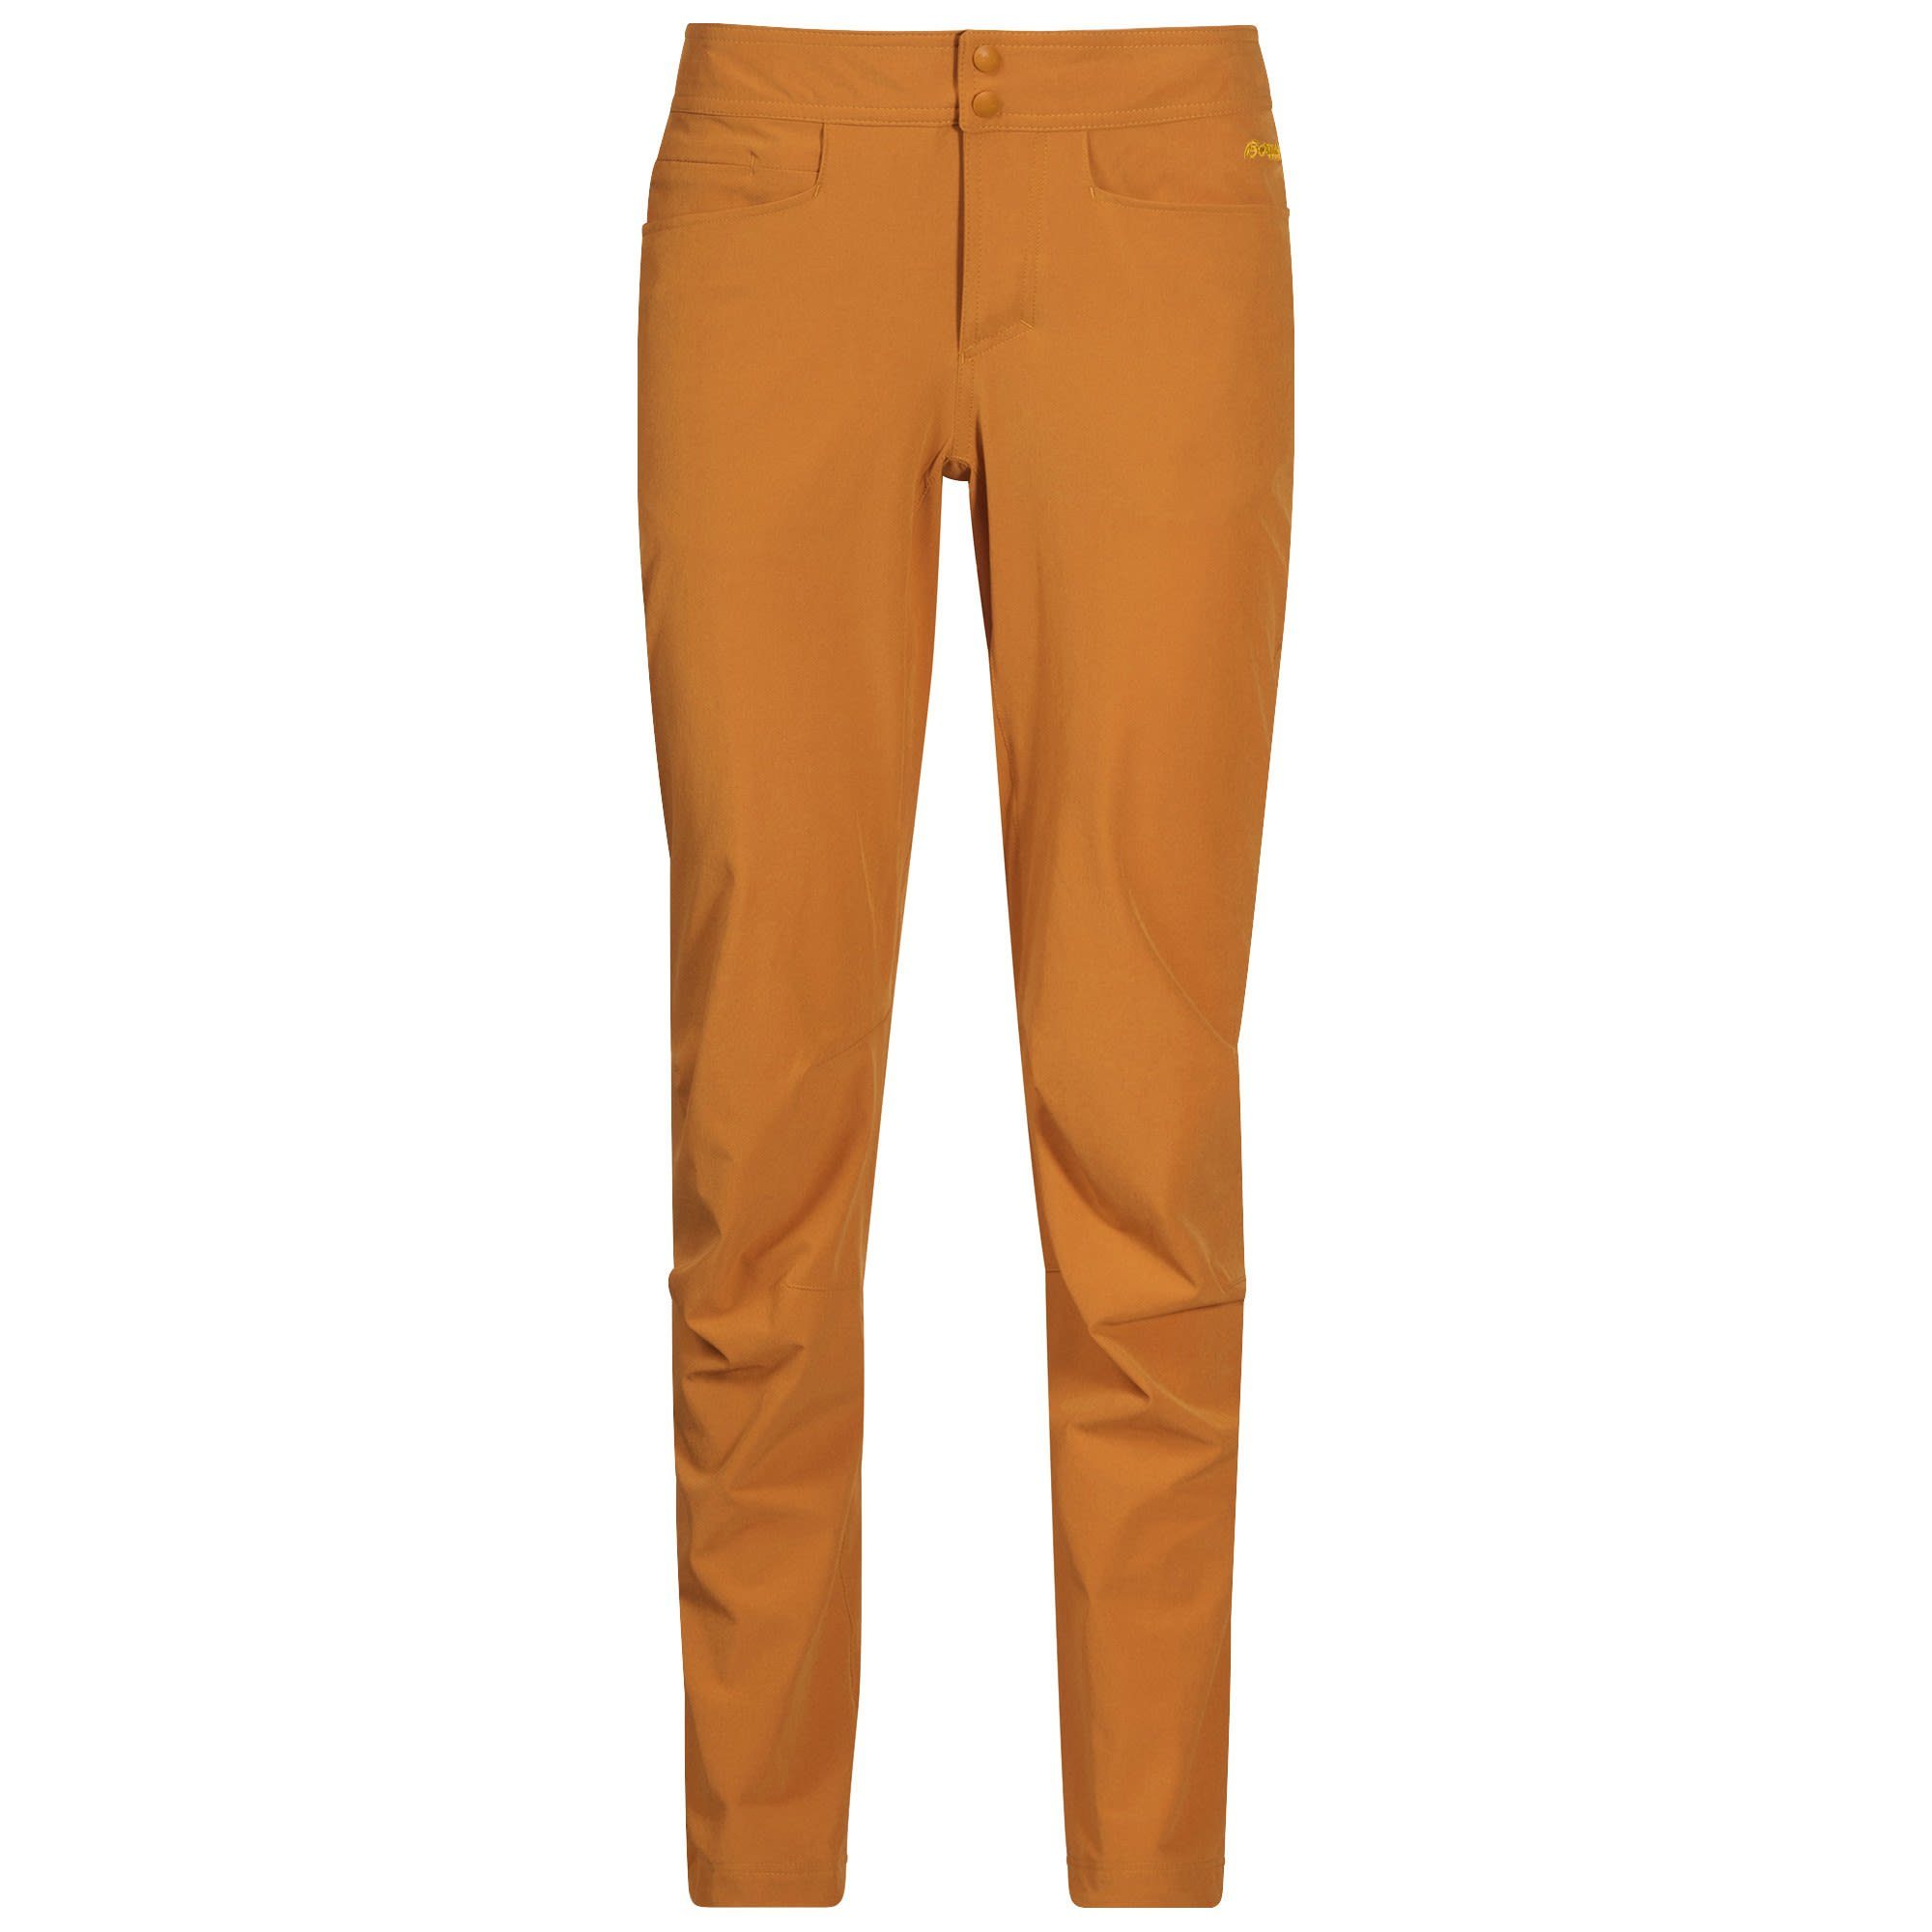 Damen Bergans Hose Softshellhose Pants Shorts & Bergans Flex orange Cecilie